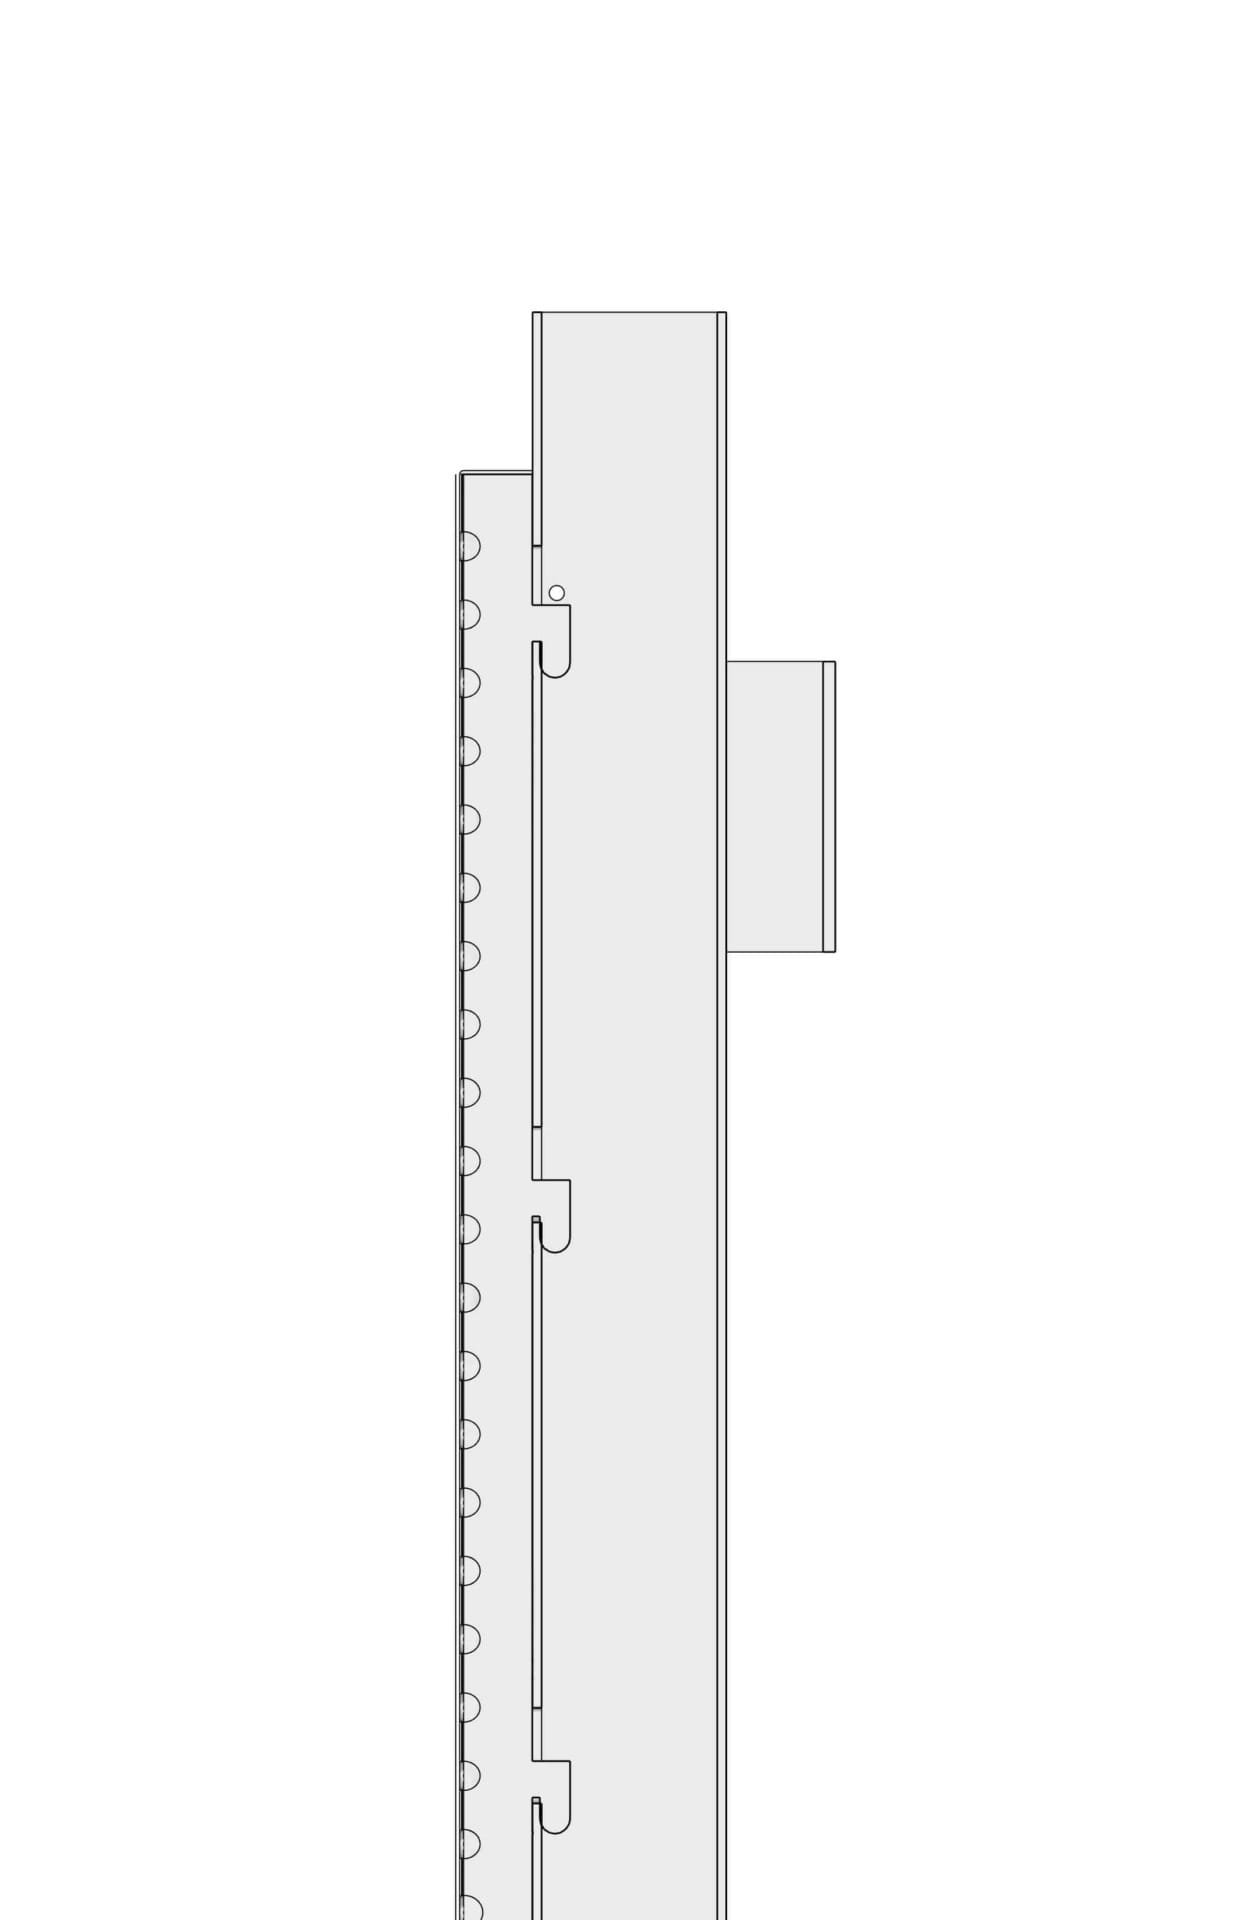 Profile model of installed Drop & Lock panel.